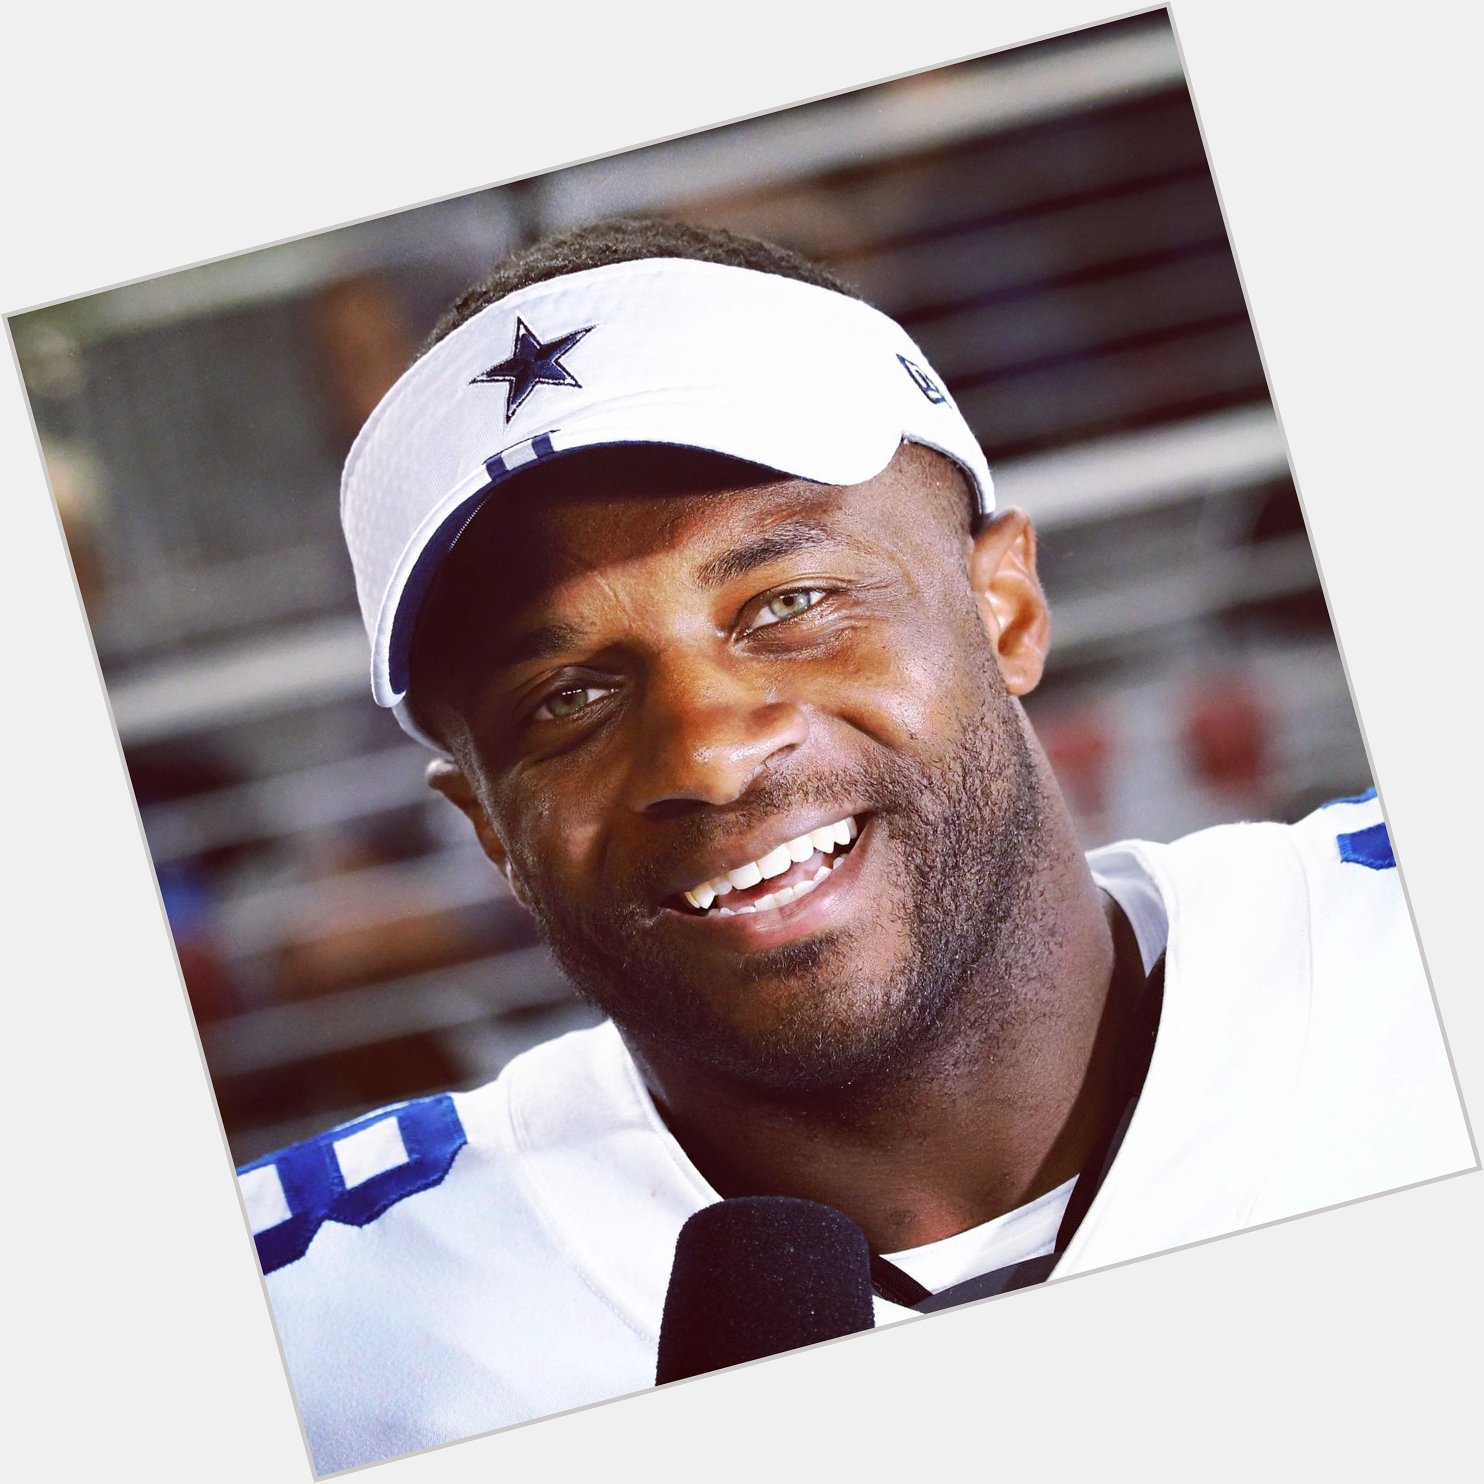 Happy birthday to Dallas Cowboys wide receiver, Randall Cobb! 